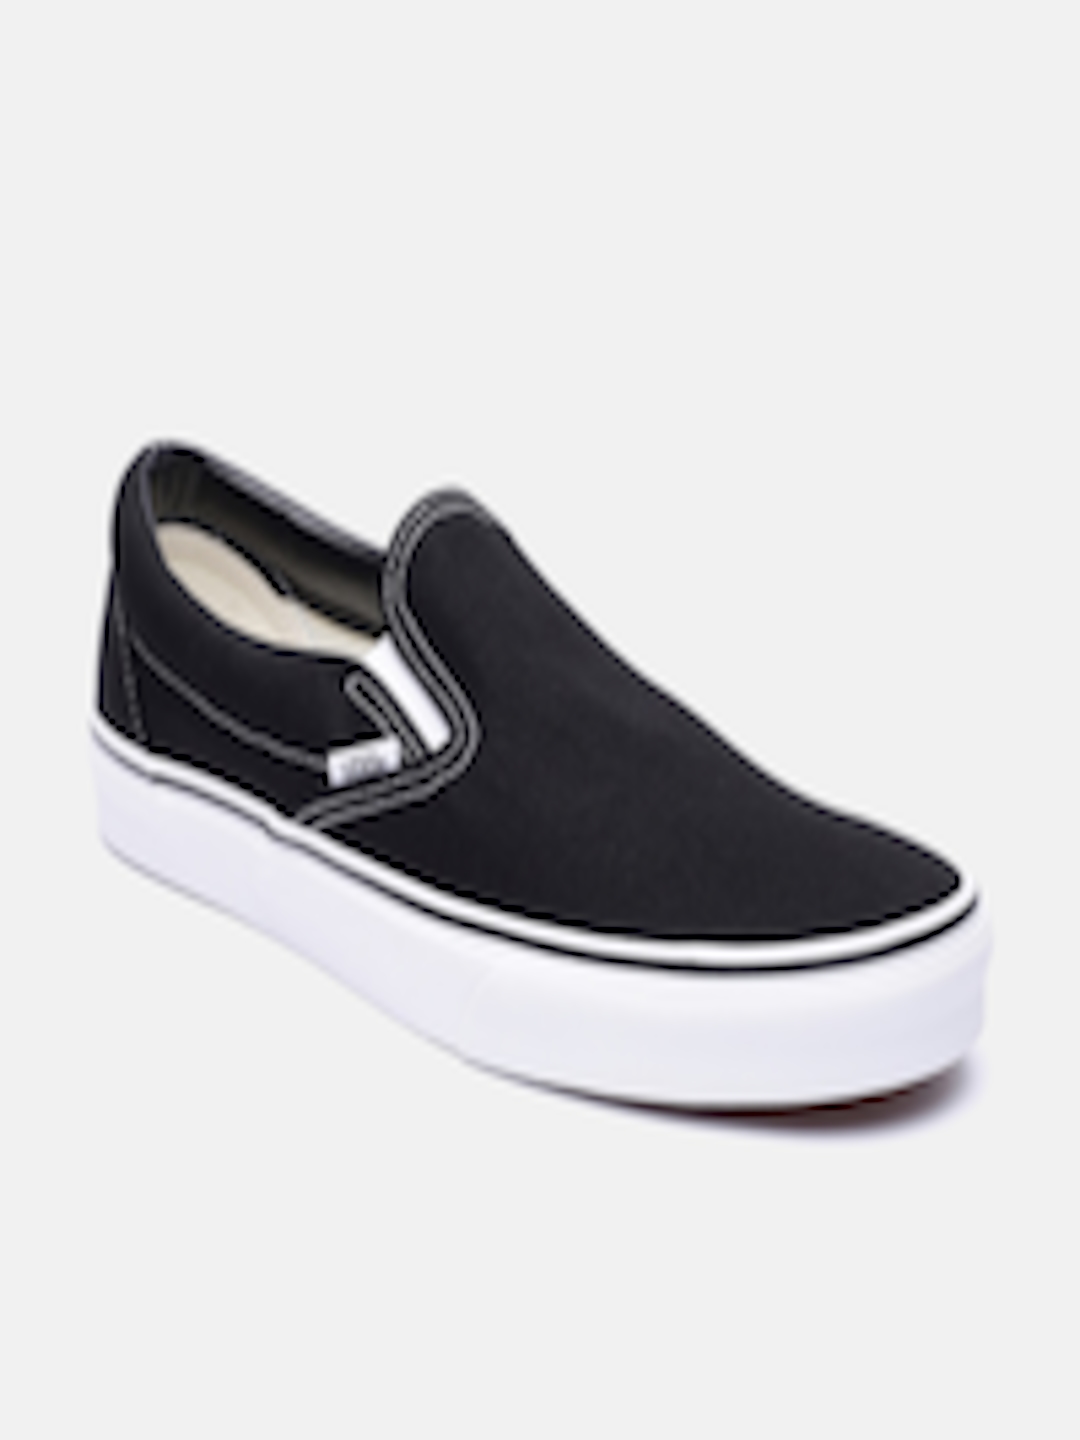 Buy Vans Unisex Black Slip On Sneakers - Casual Shoes for Unisex ...